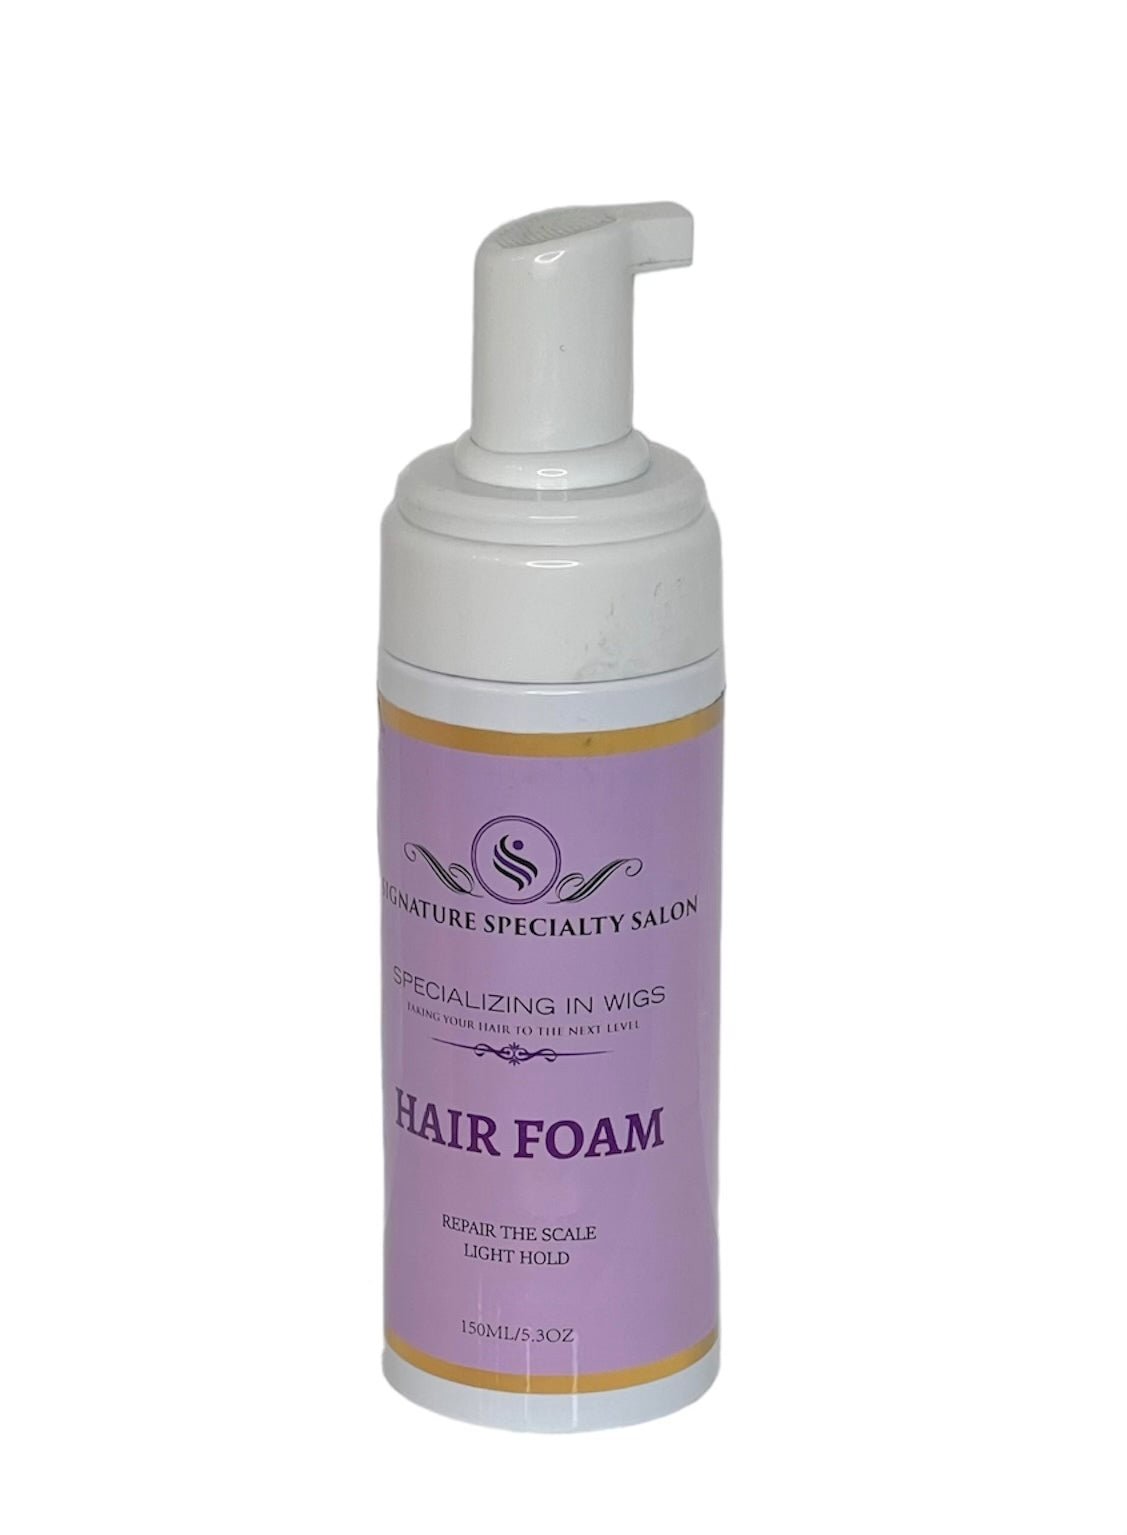 Hair Foam - Signature Specialty Salon